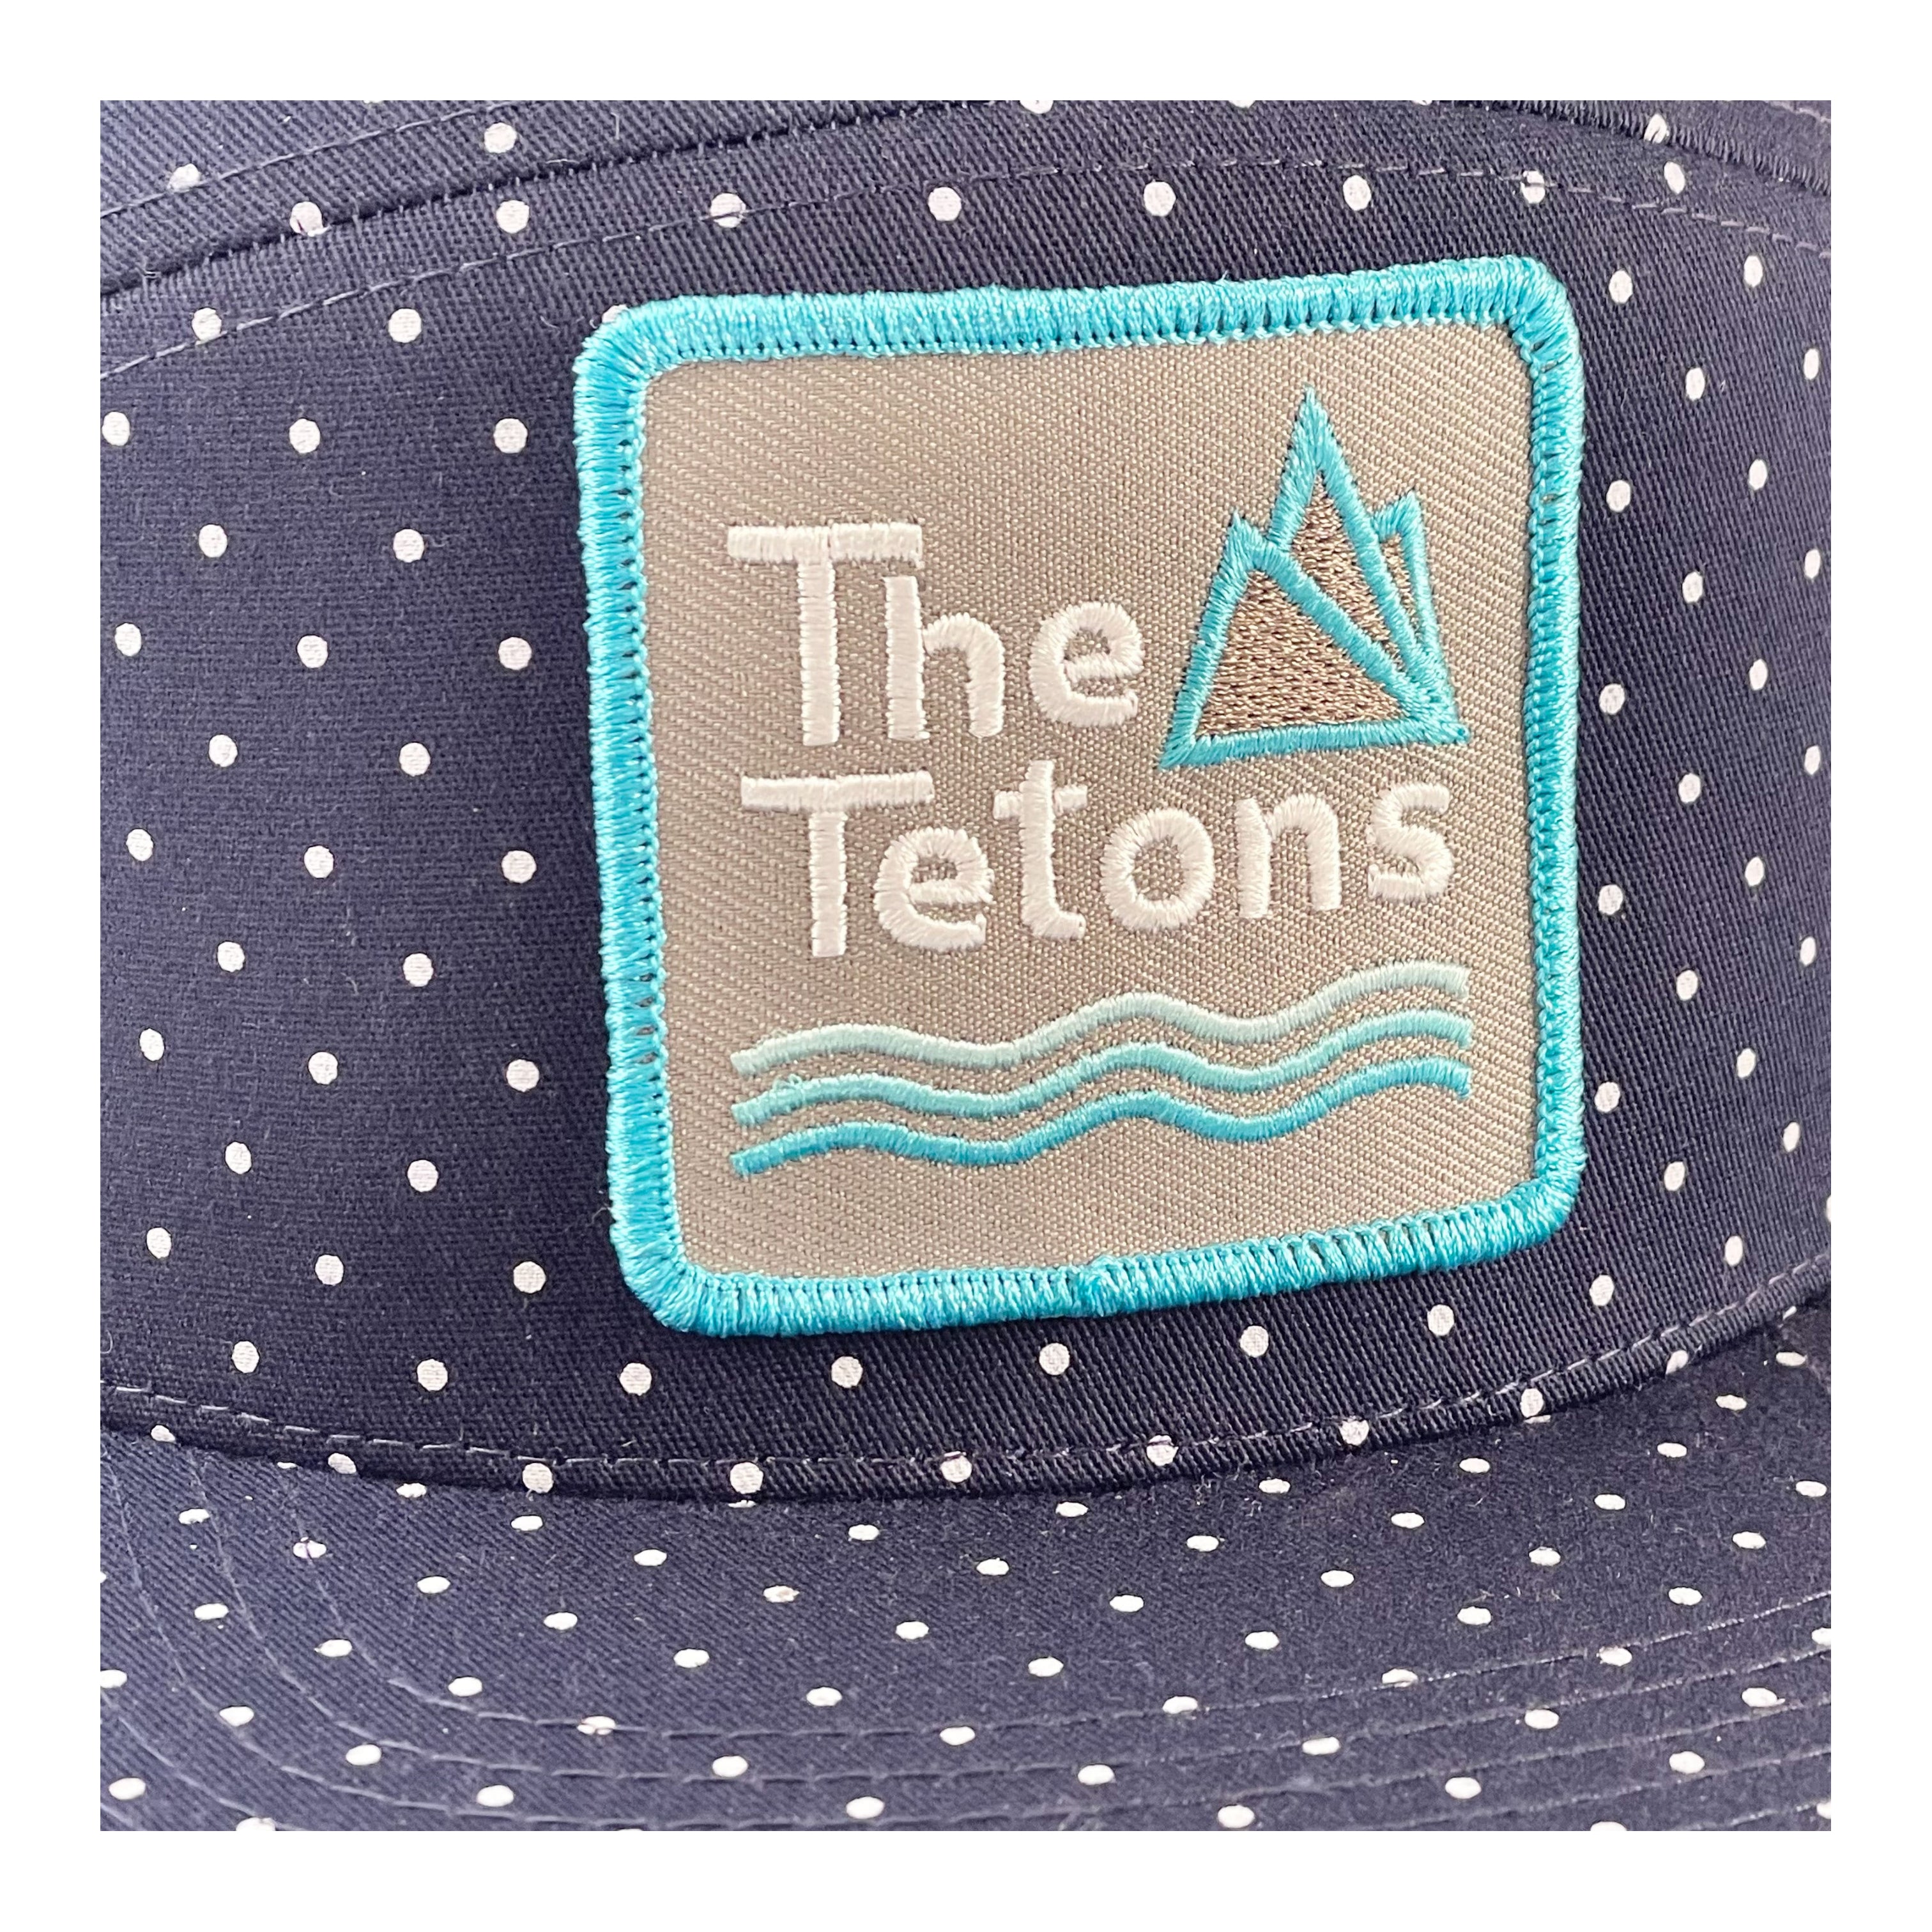 Tetons Patch on Navy Polka Dot Flat Bill Hat